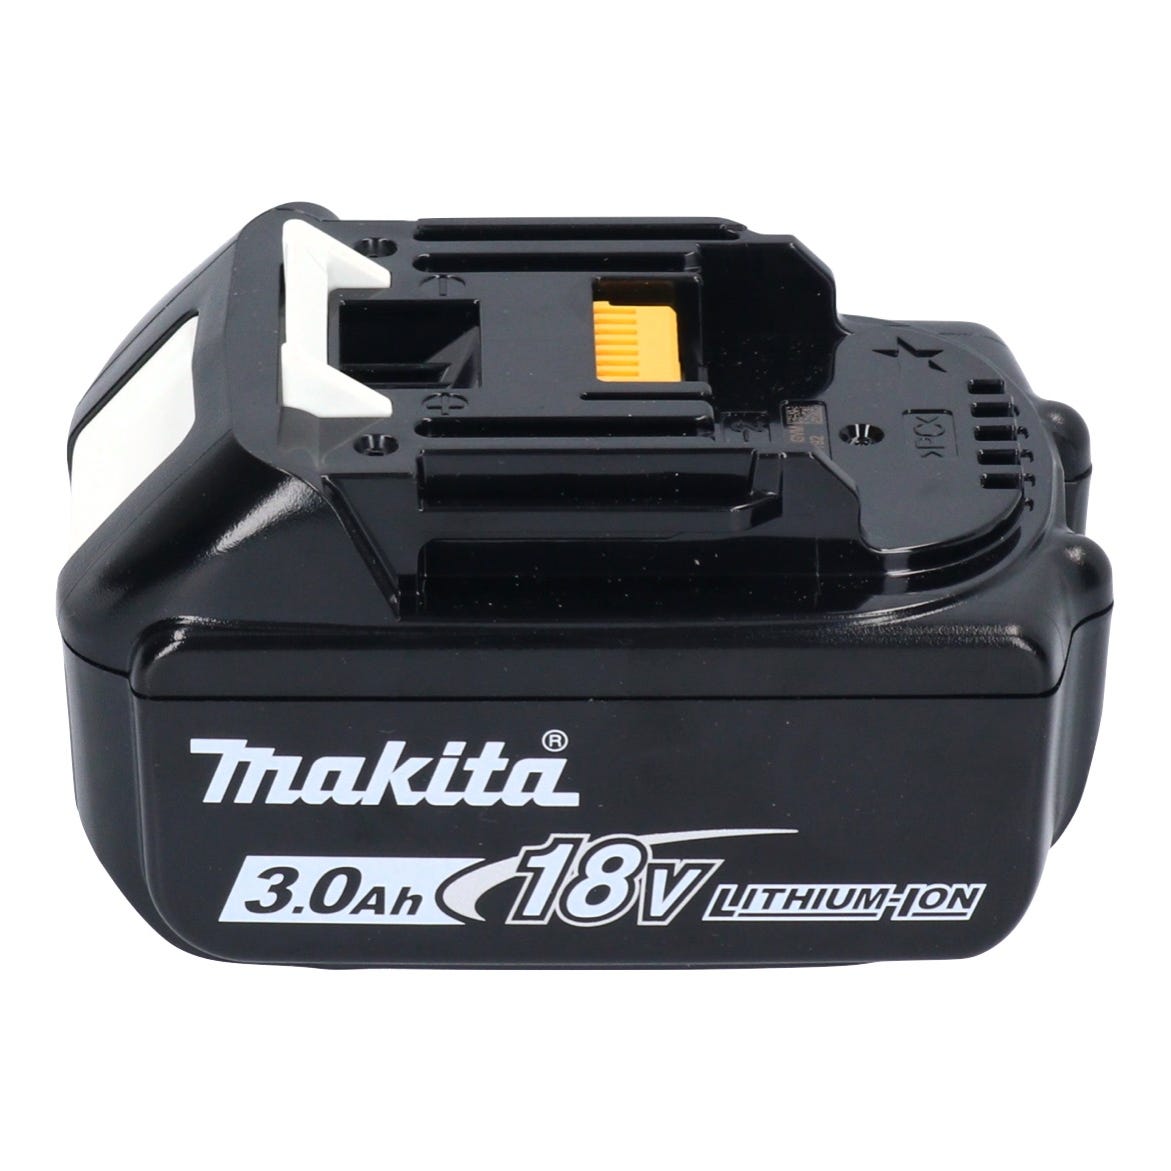 Makita DHP 489 F1J Perceuse-visseuse à percussion sans fil 18 V 73 Nm Brushless + 1x batterie 3,0 Ah + Makpac - sans chargeur 3